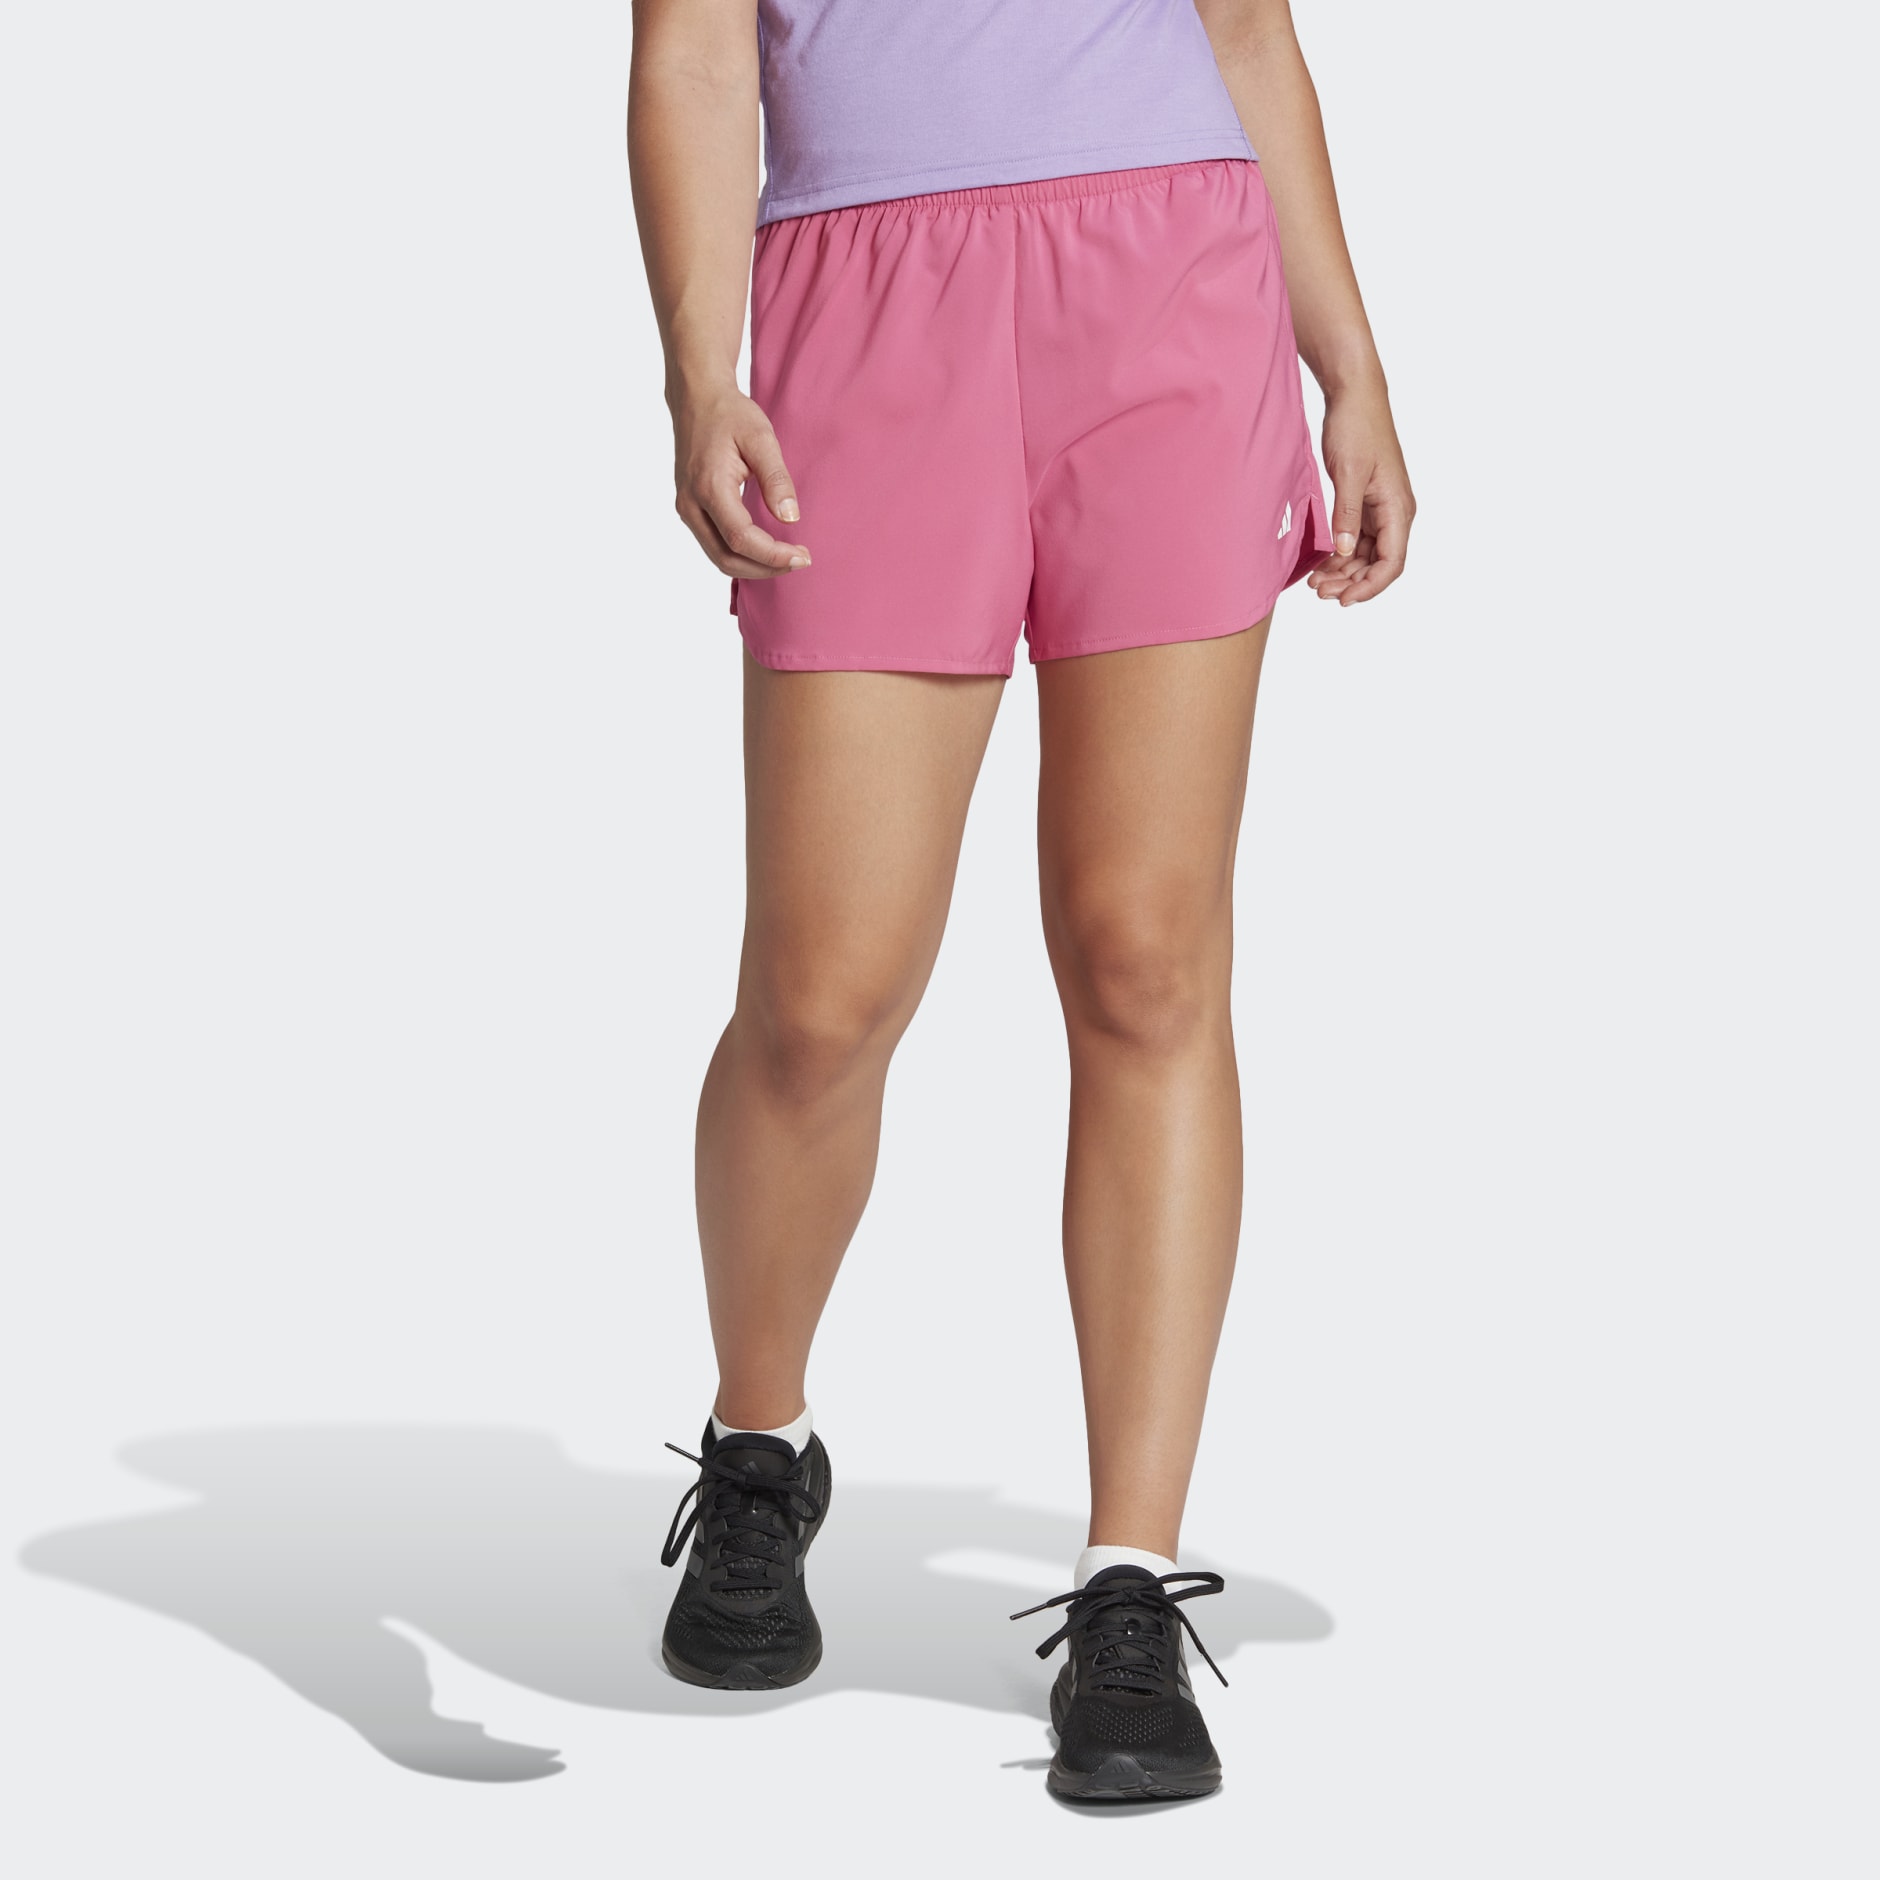 Women's Clothing - AEROREADY Made for Training Minimal Shorts - Pink ...